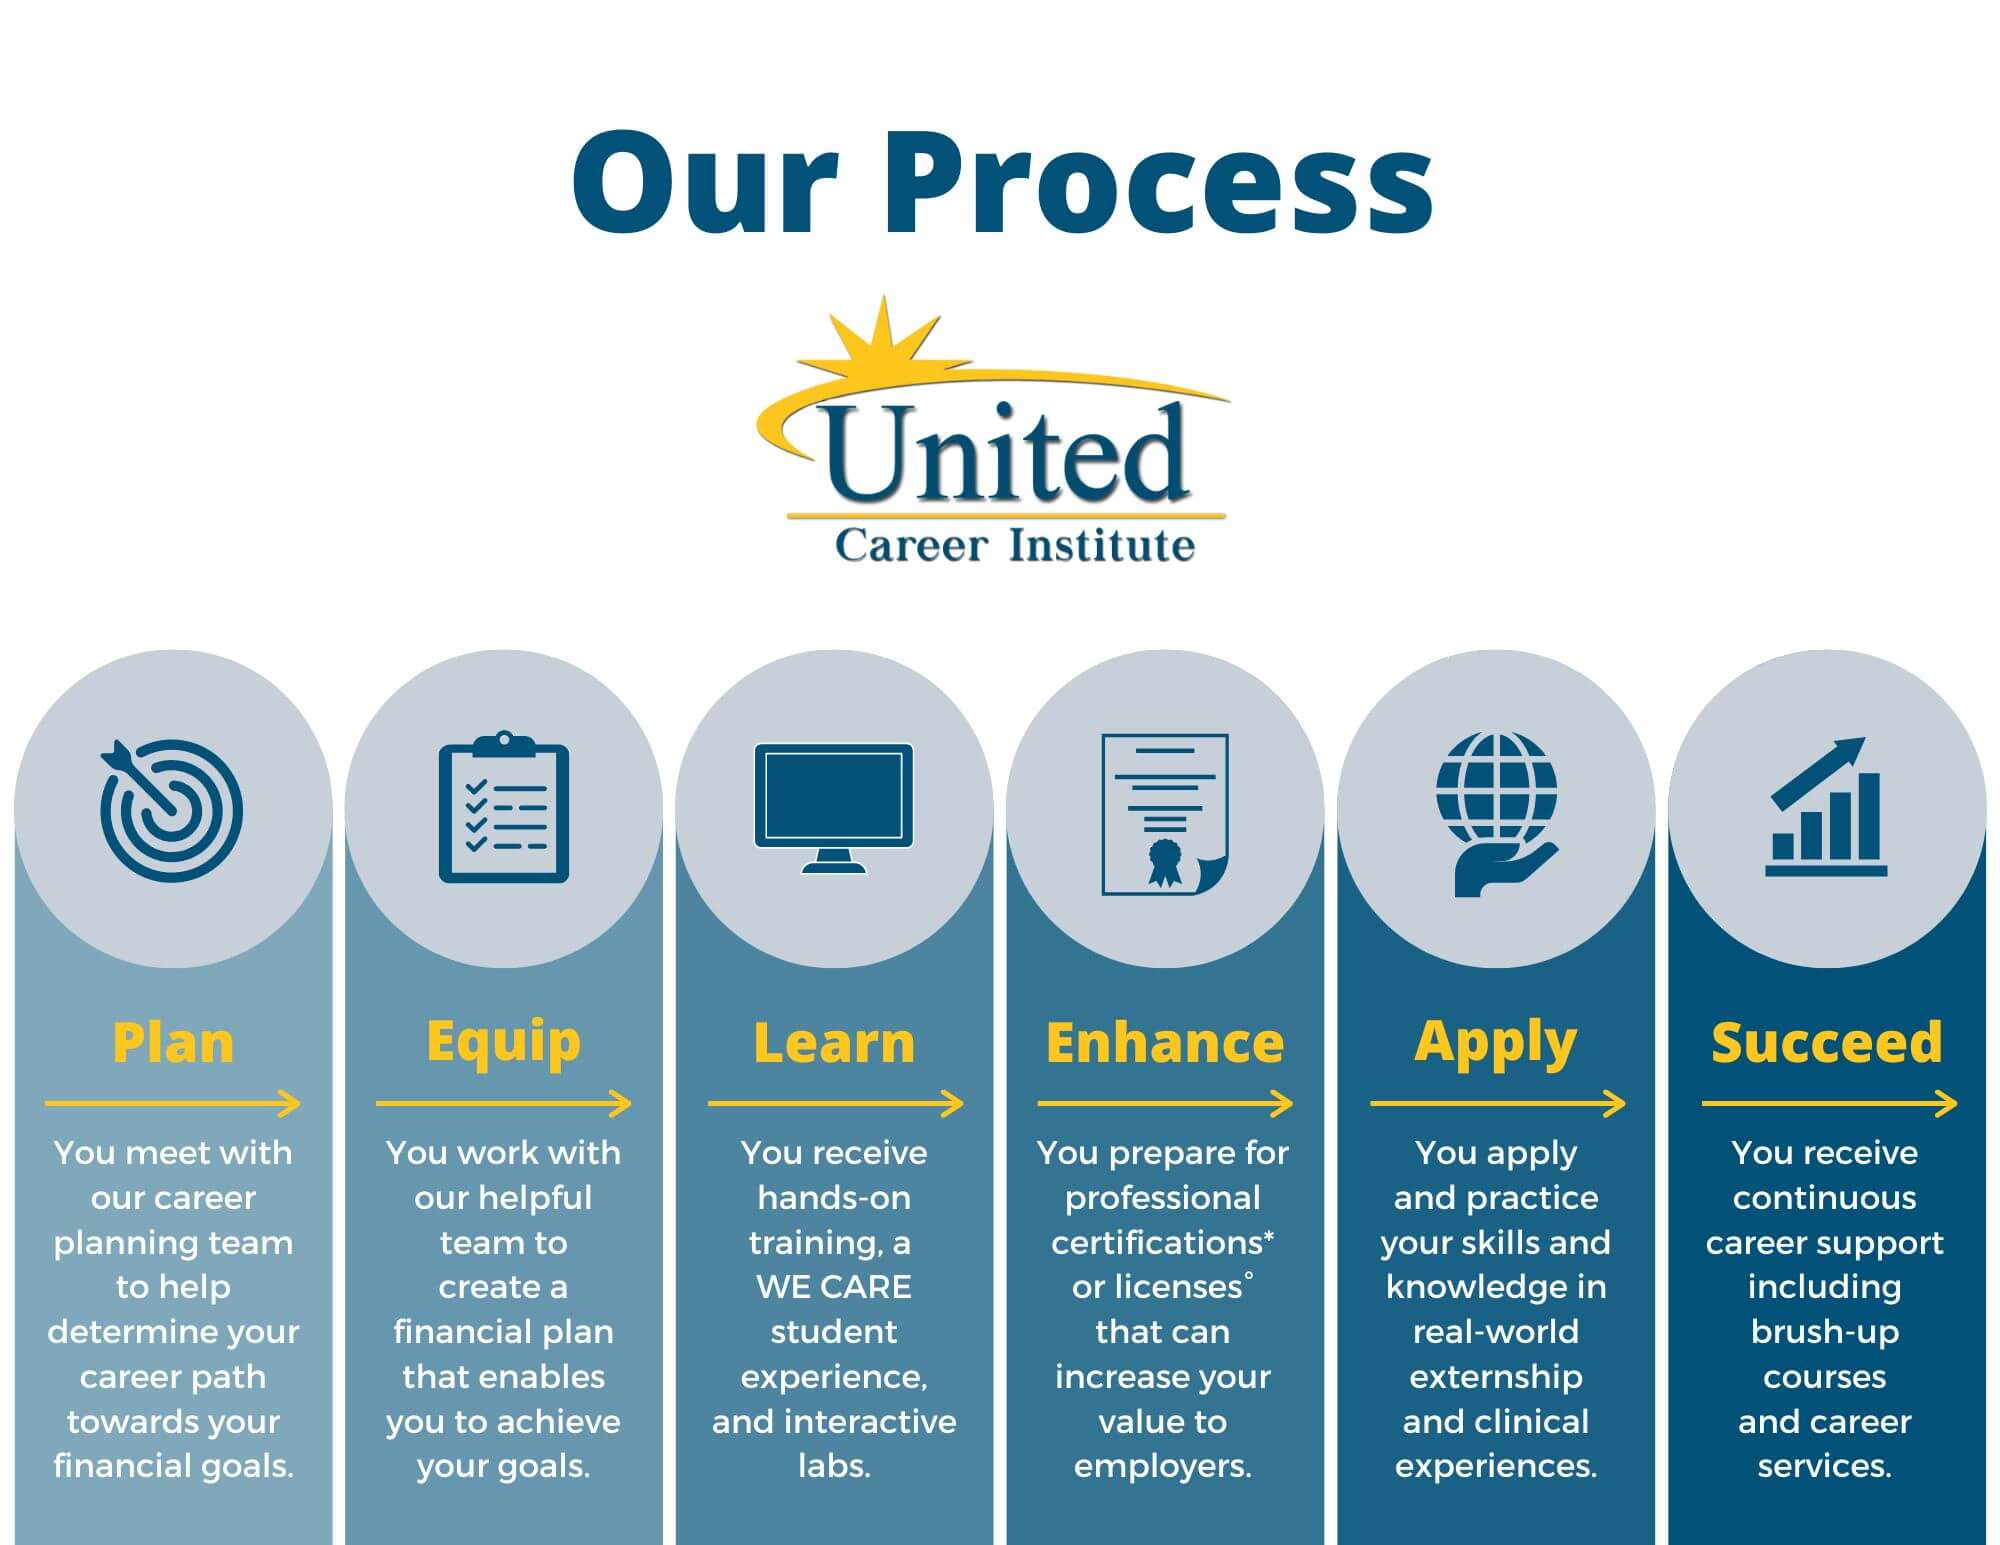 Our Process - United Career Institute